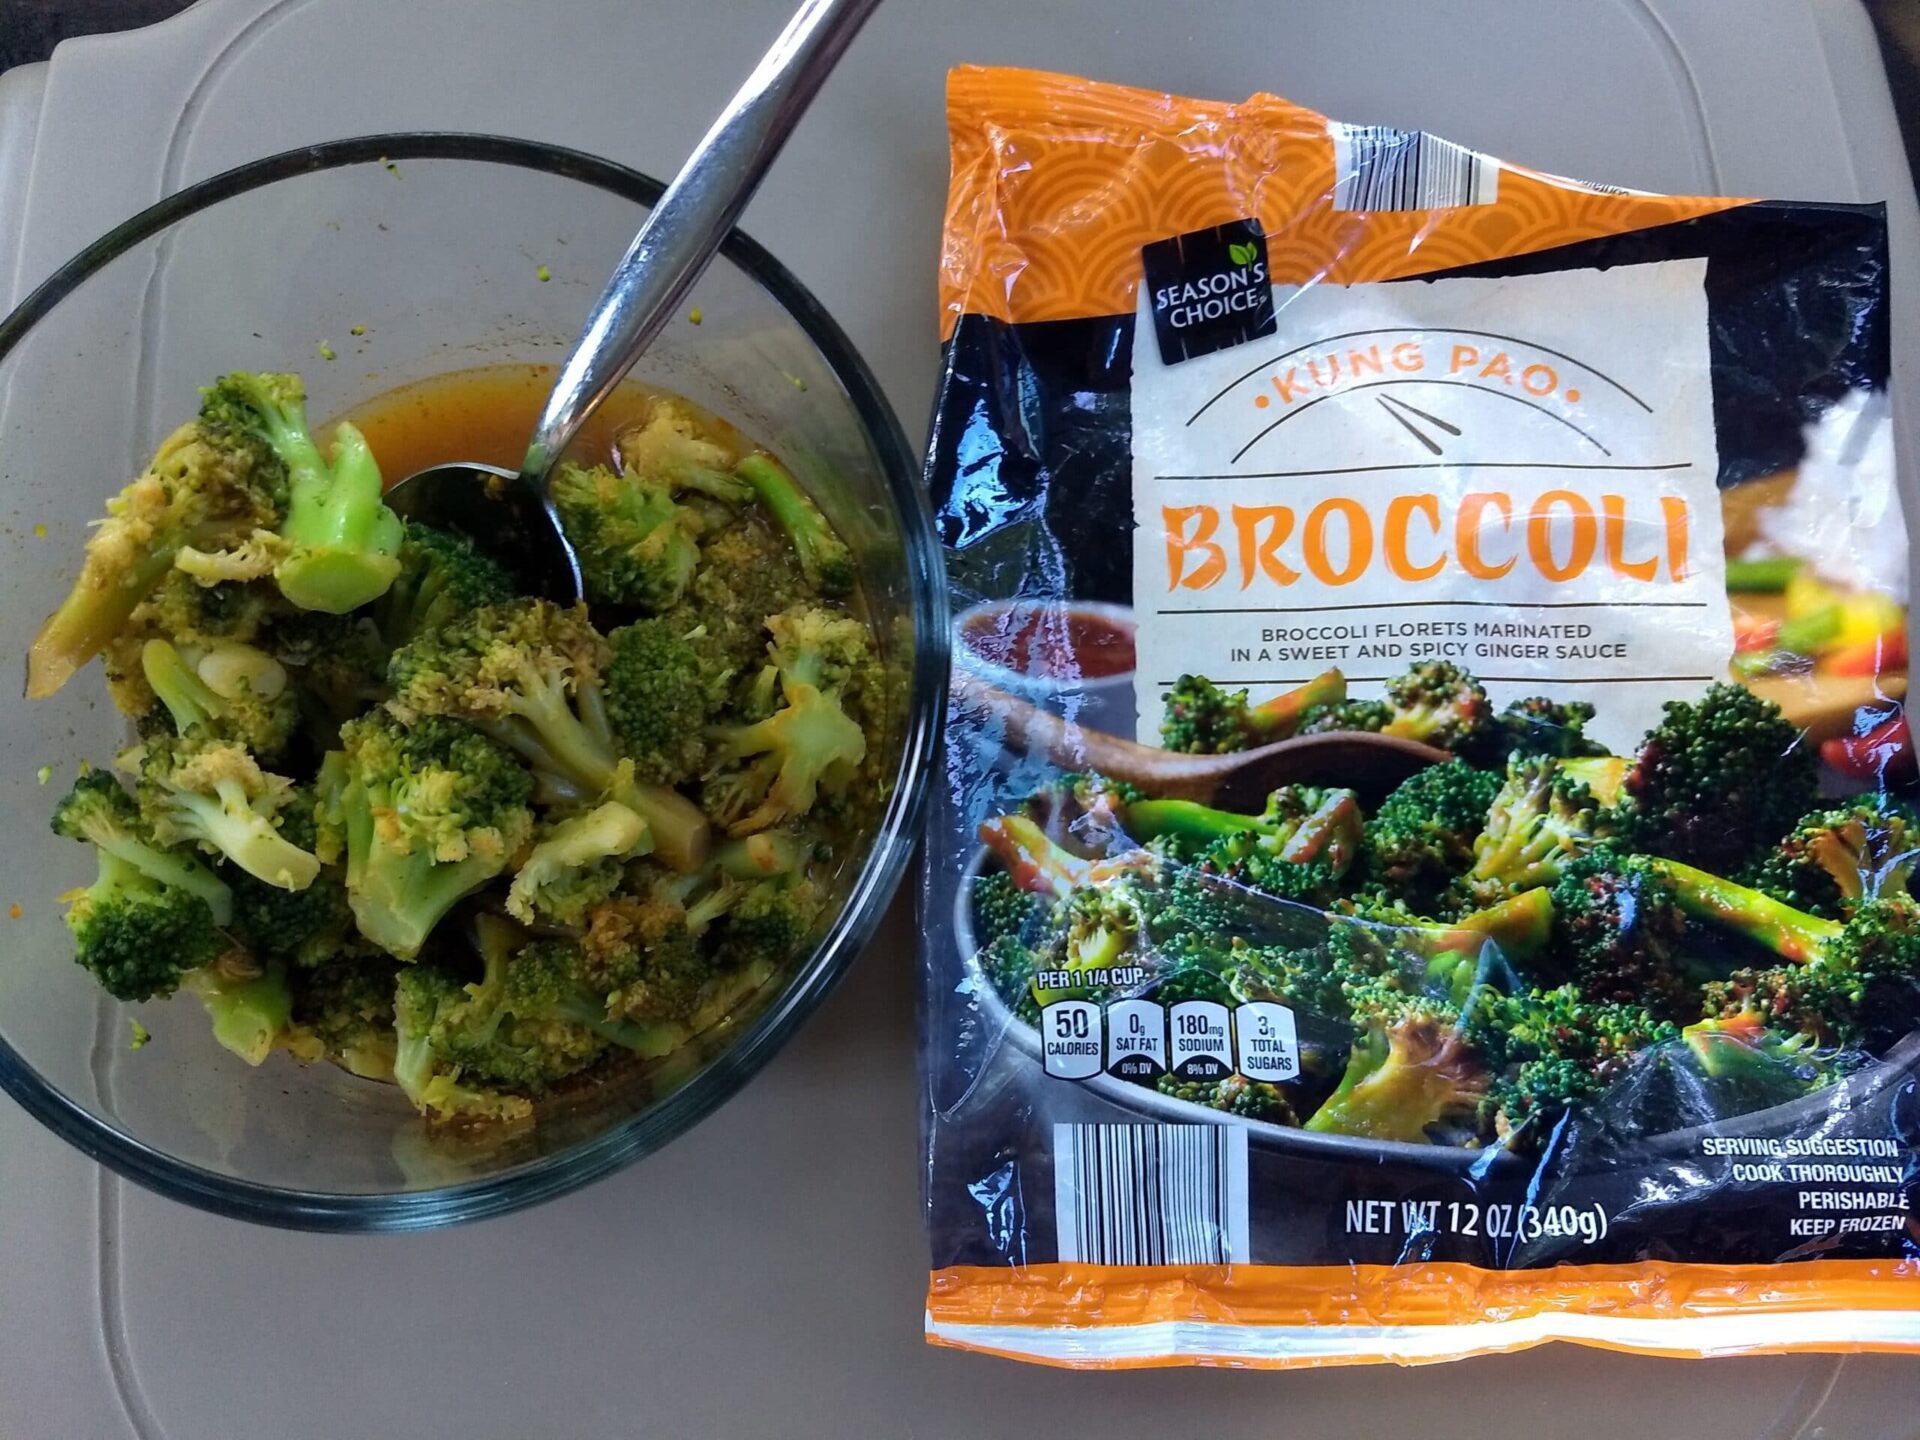 Season's Choice Kung Pao Broccoli